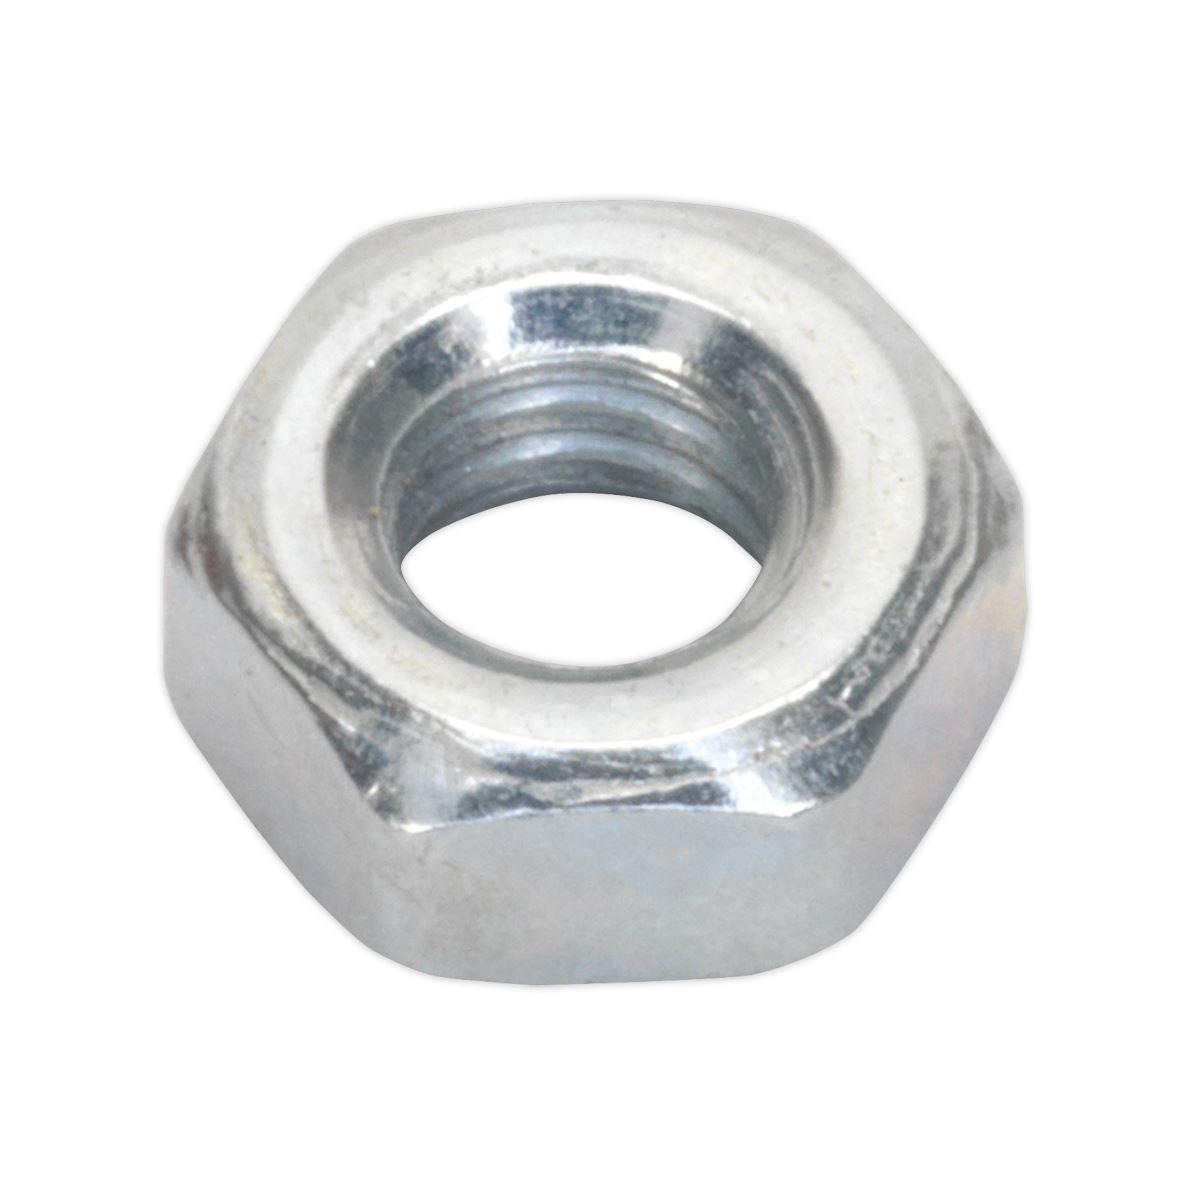 Sealey Steel Nut DIN 934 - M4 - Pack of 100